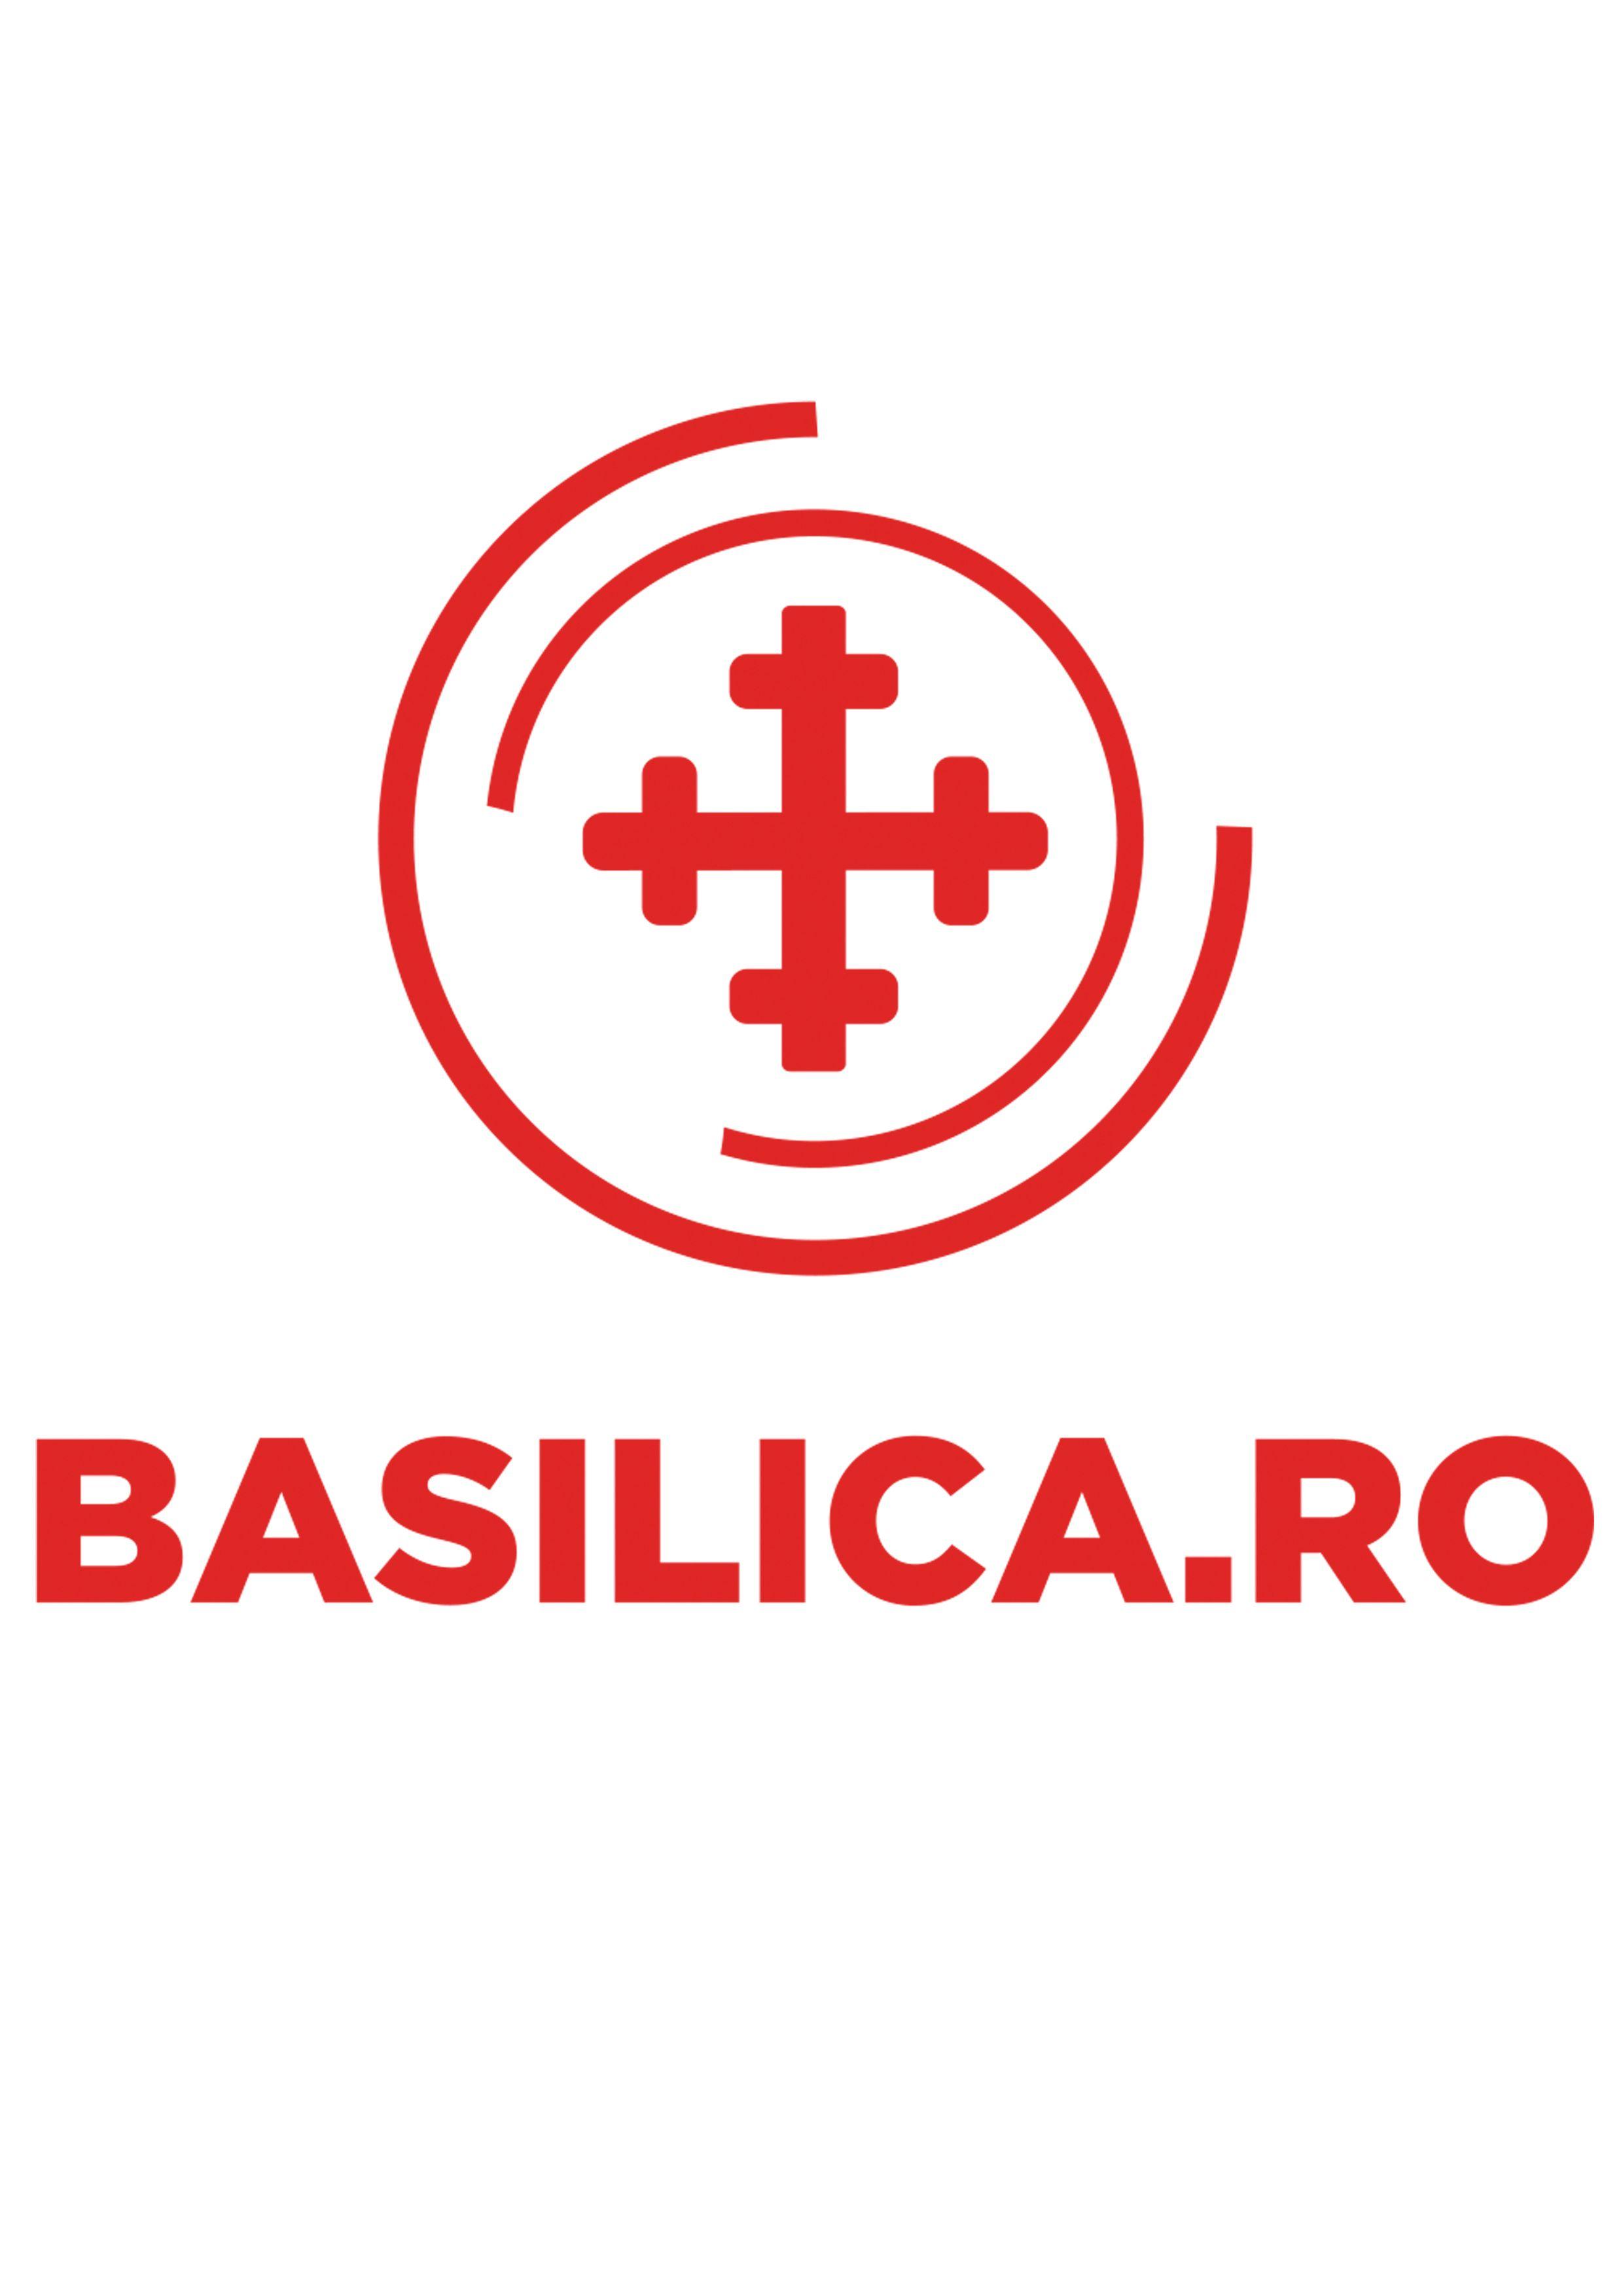 Orange News Agency Logo - Basilica News Agency